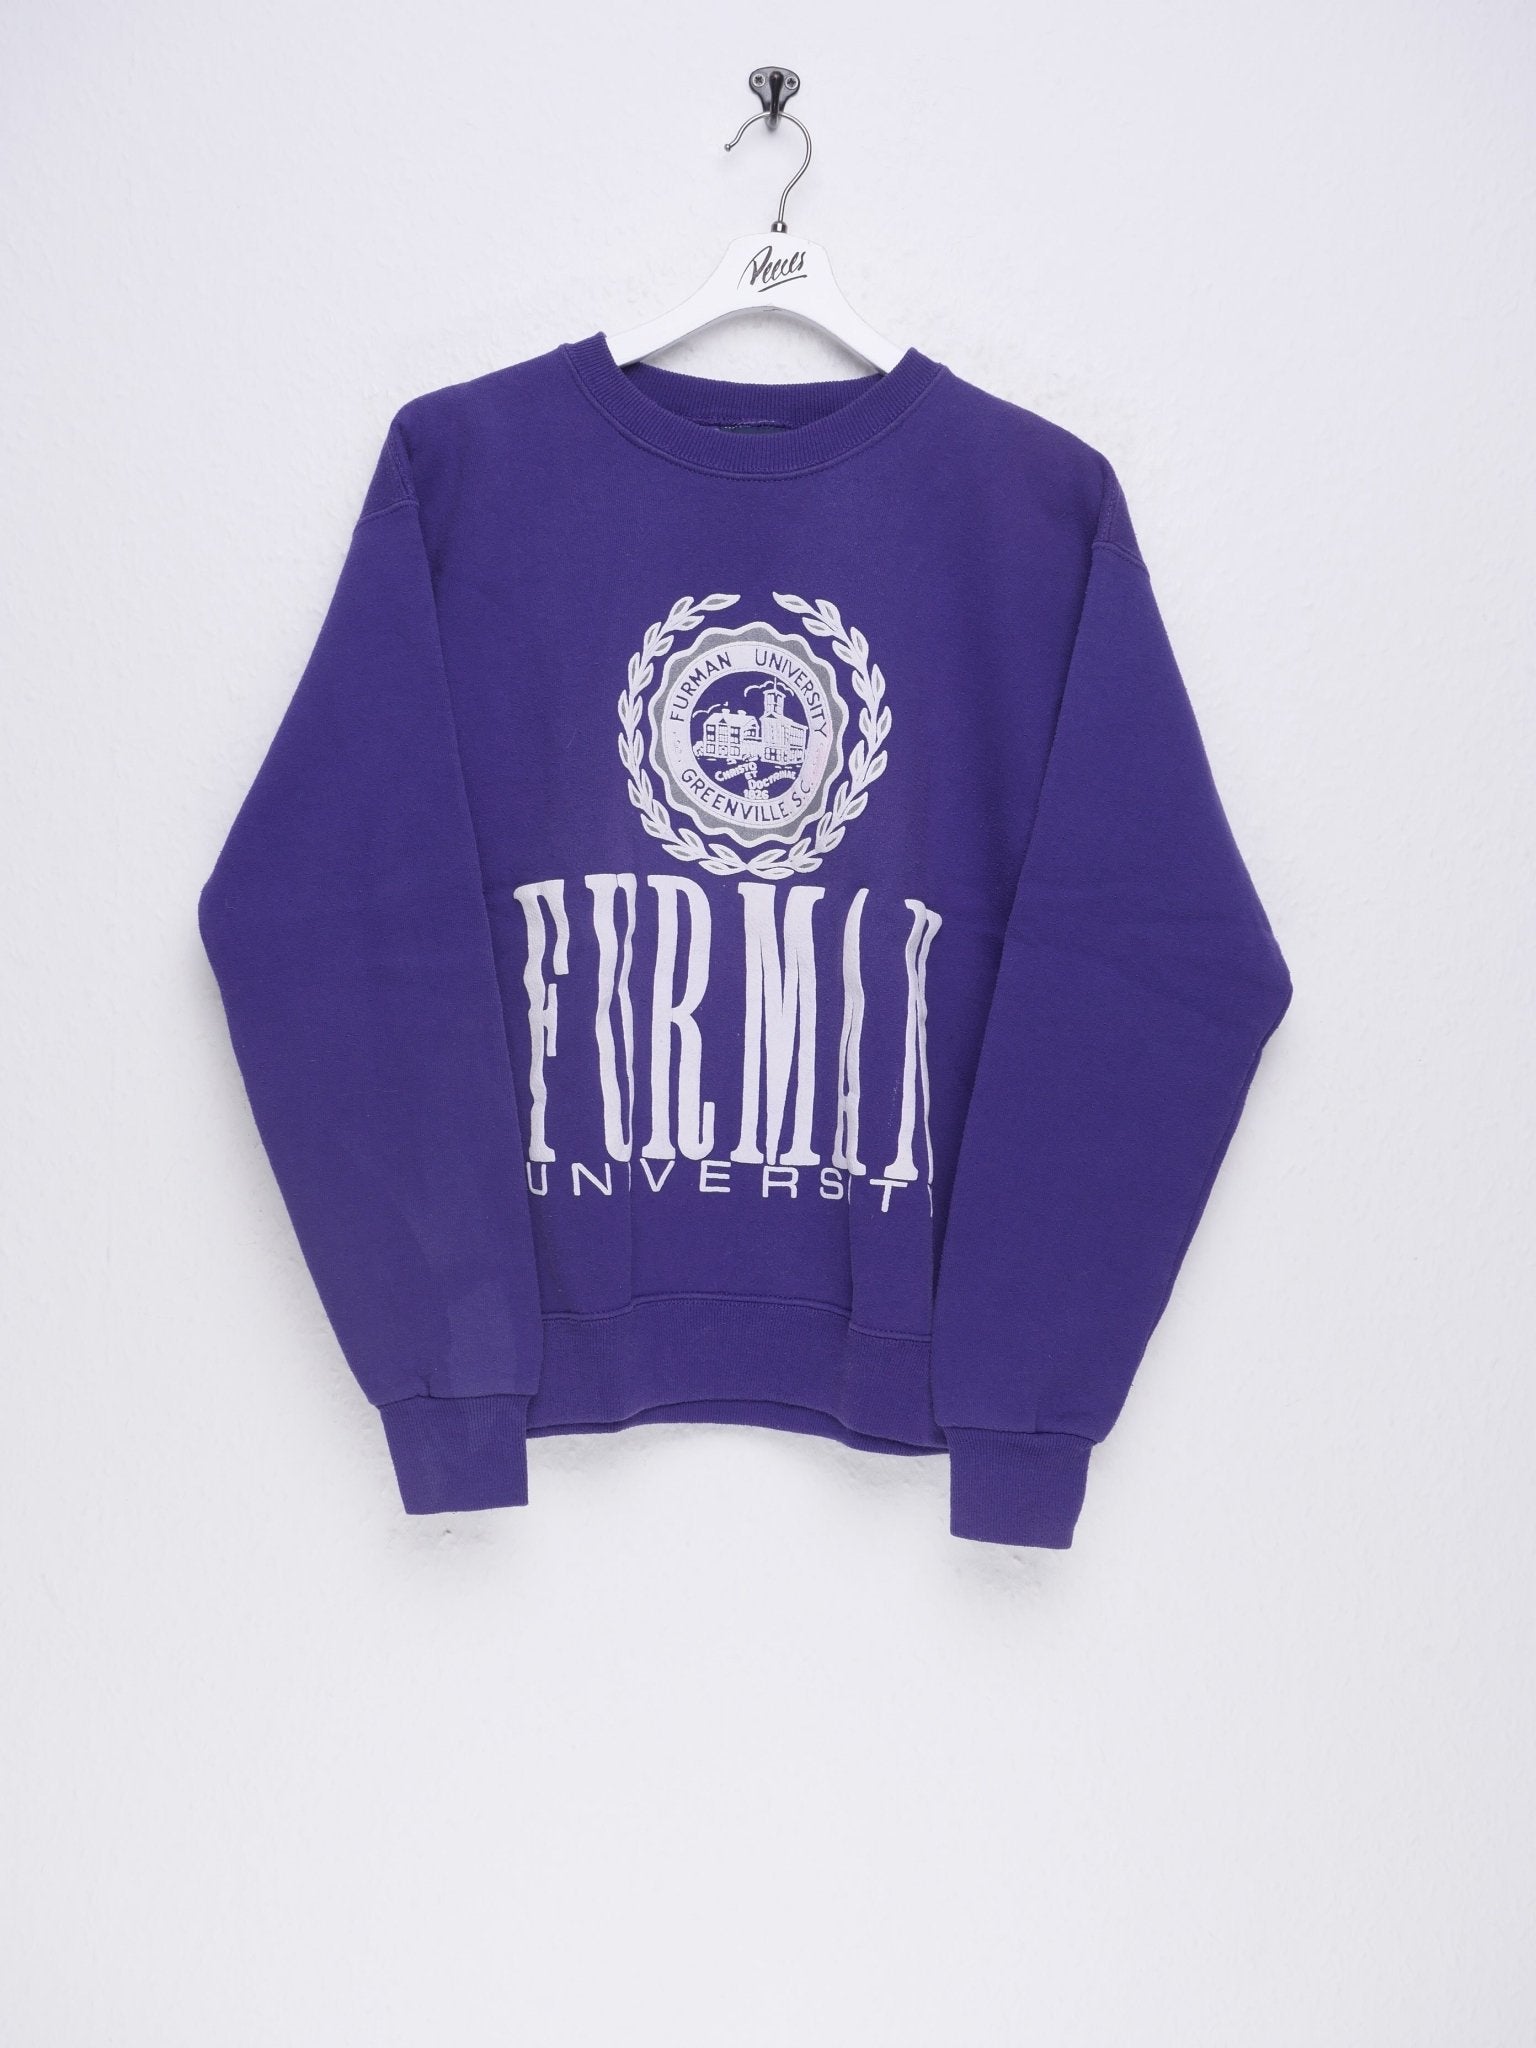 Furman University printed Graphic Vintage Sweater - Peeces